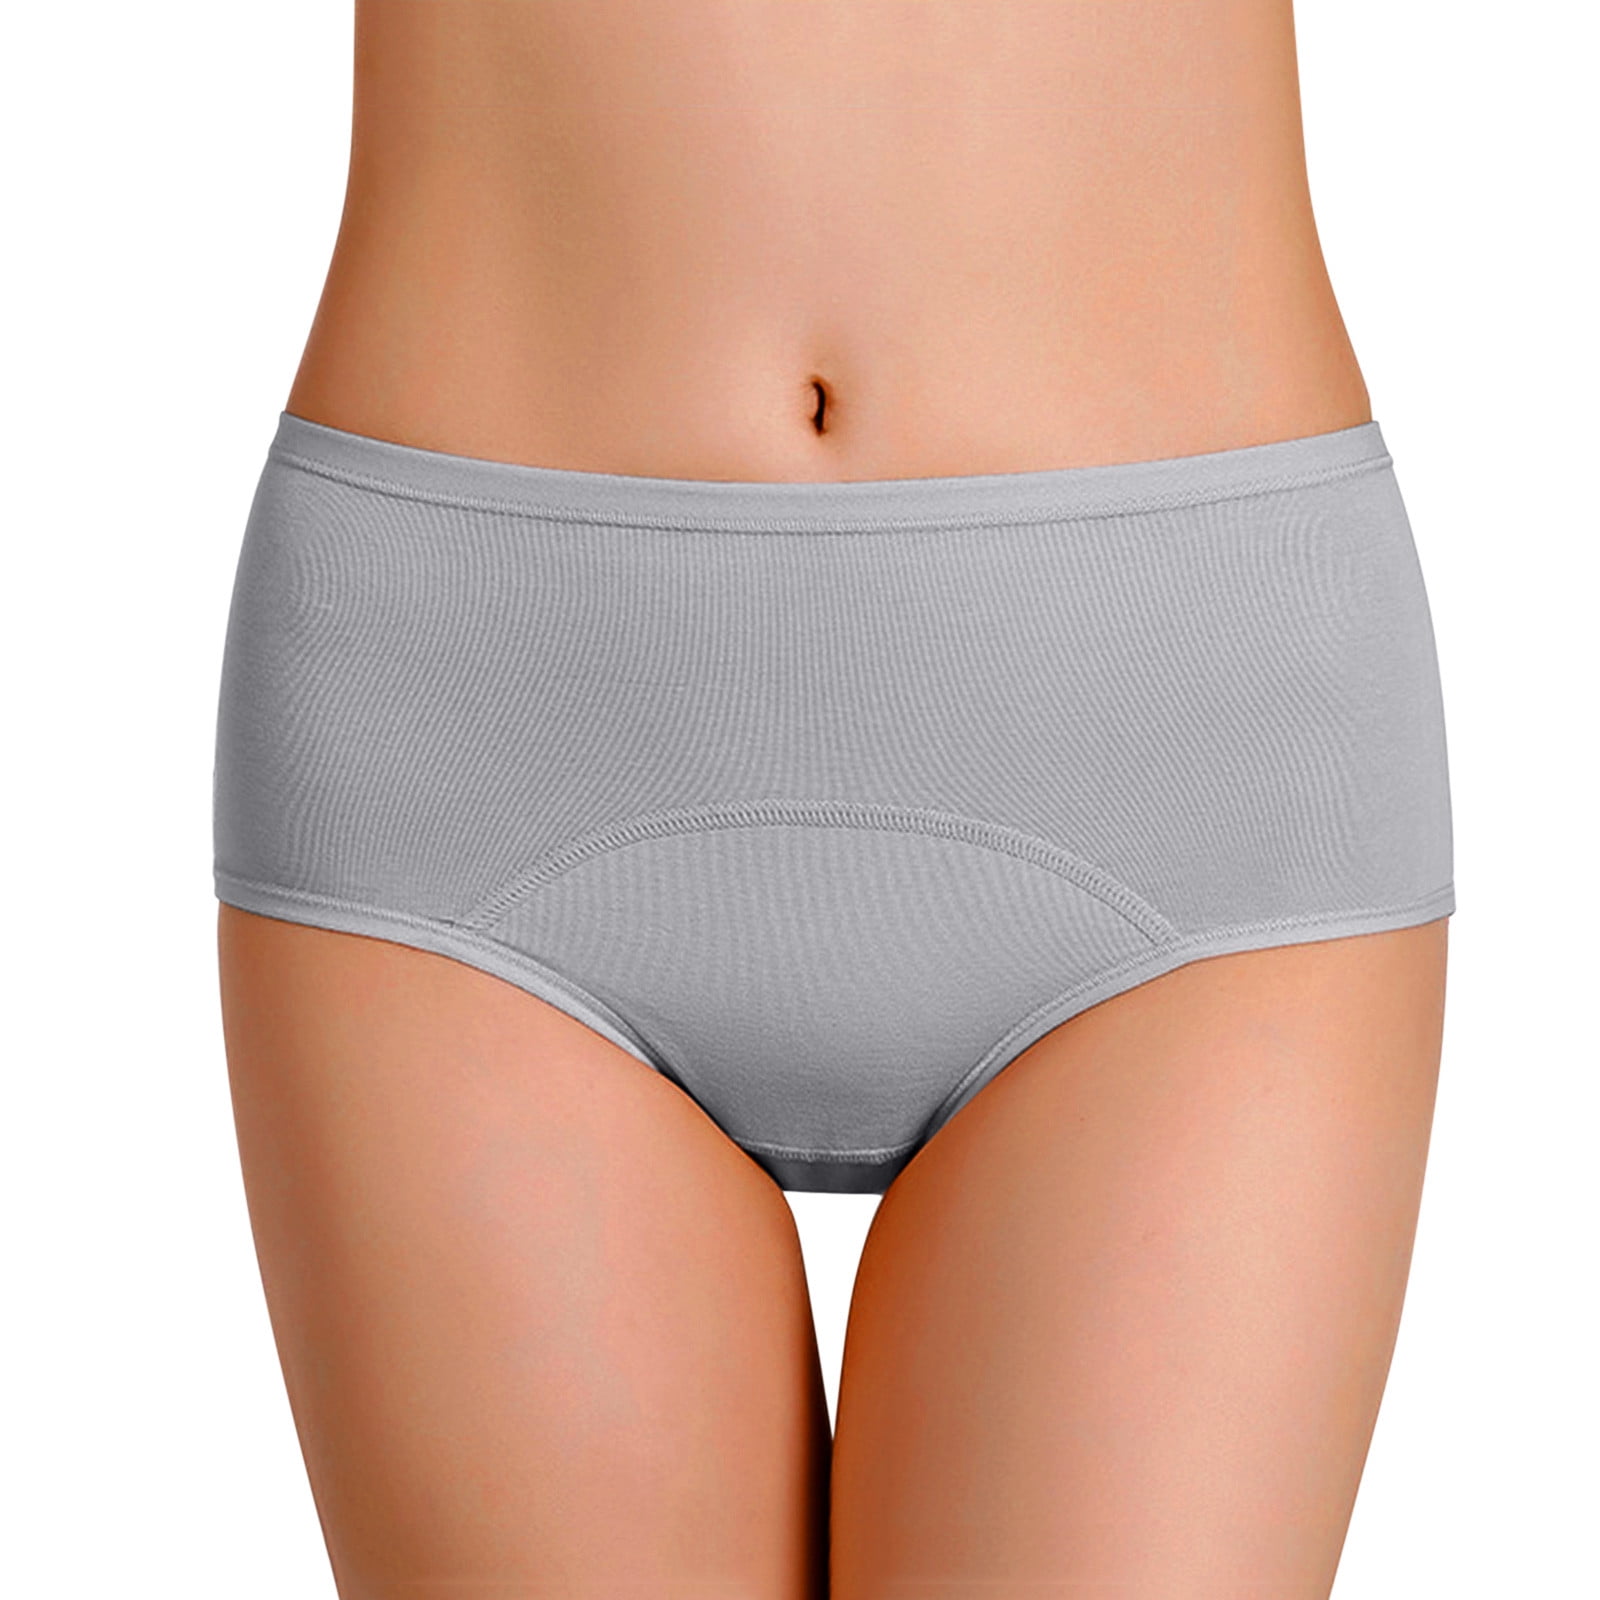 Shop Fashion Women's Cotton Panties Soft Underwear Girl Breathable Briefs  Online